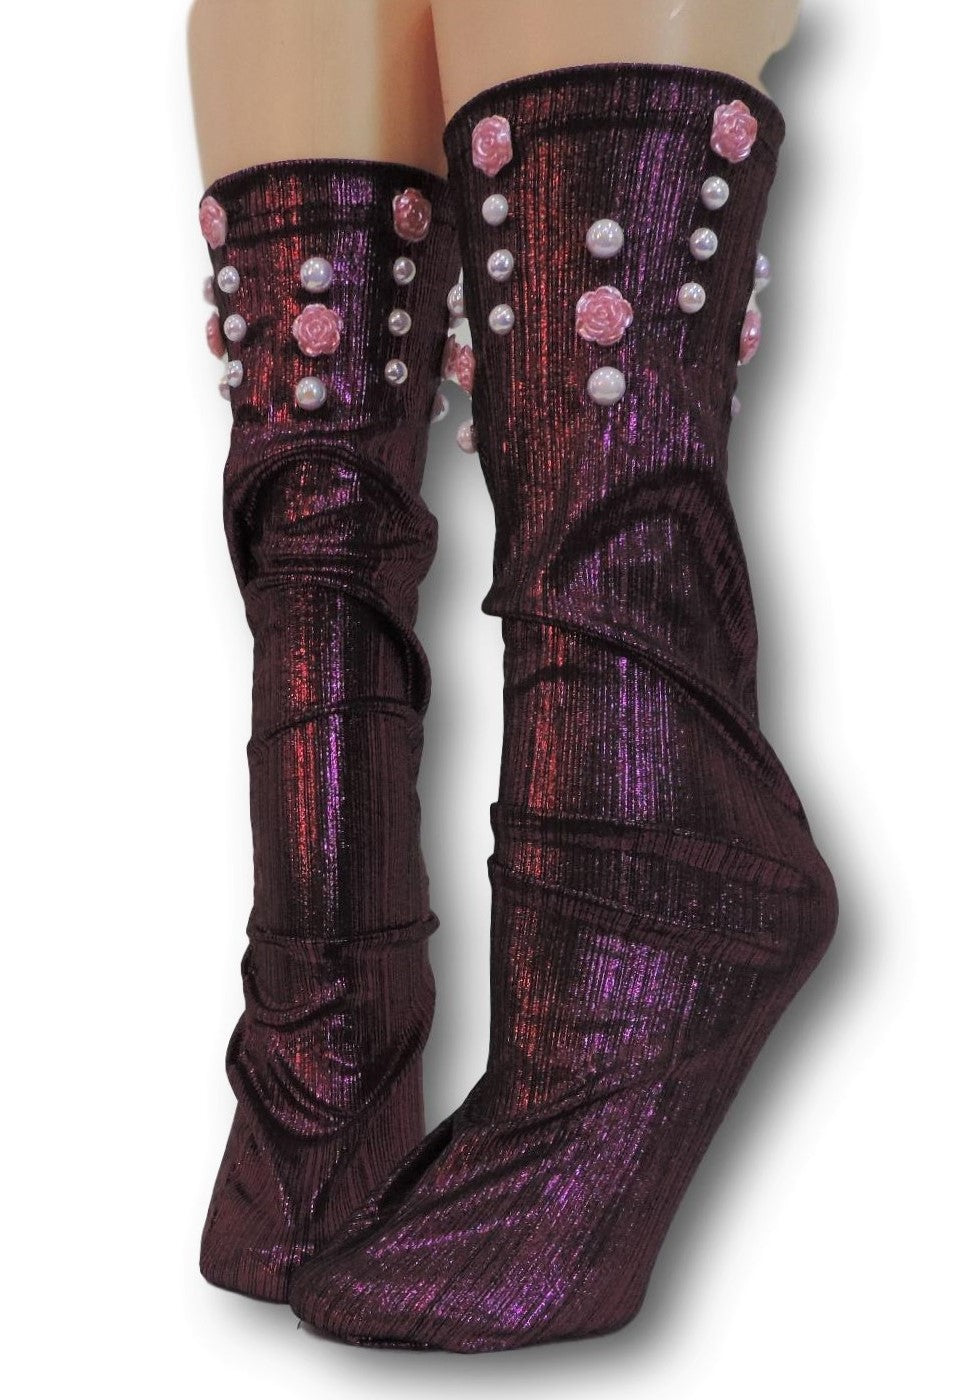 Sangria Reflective Socks with beads